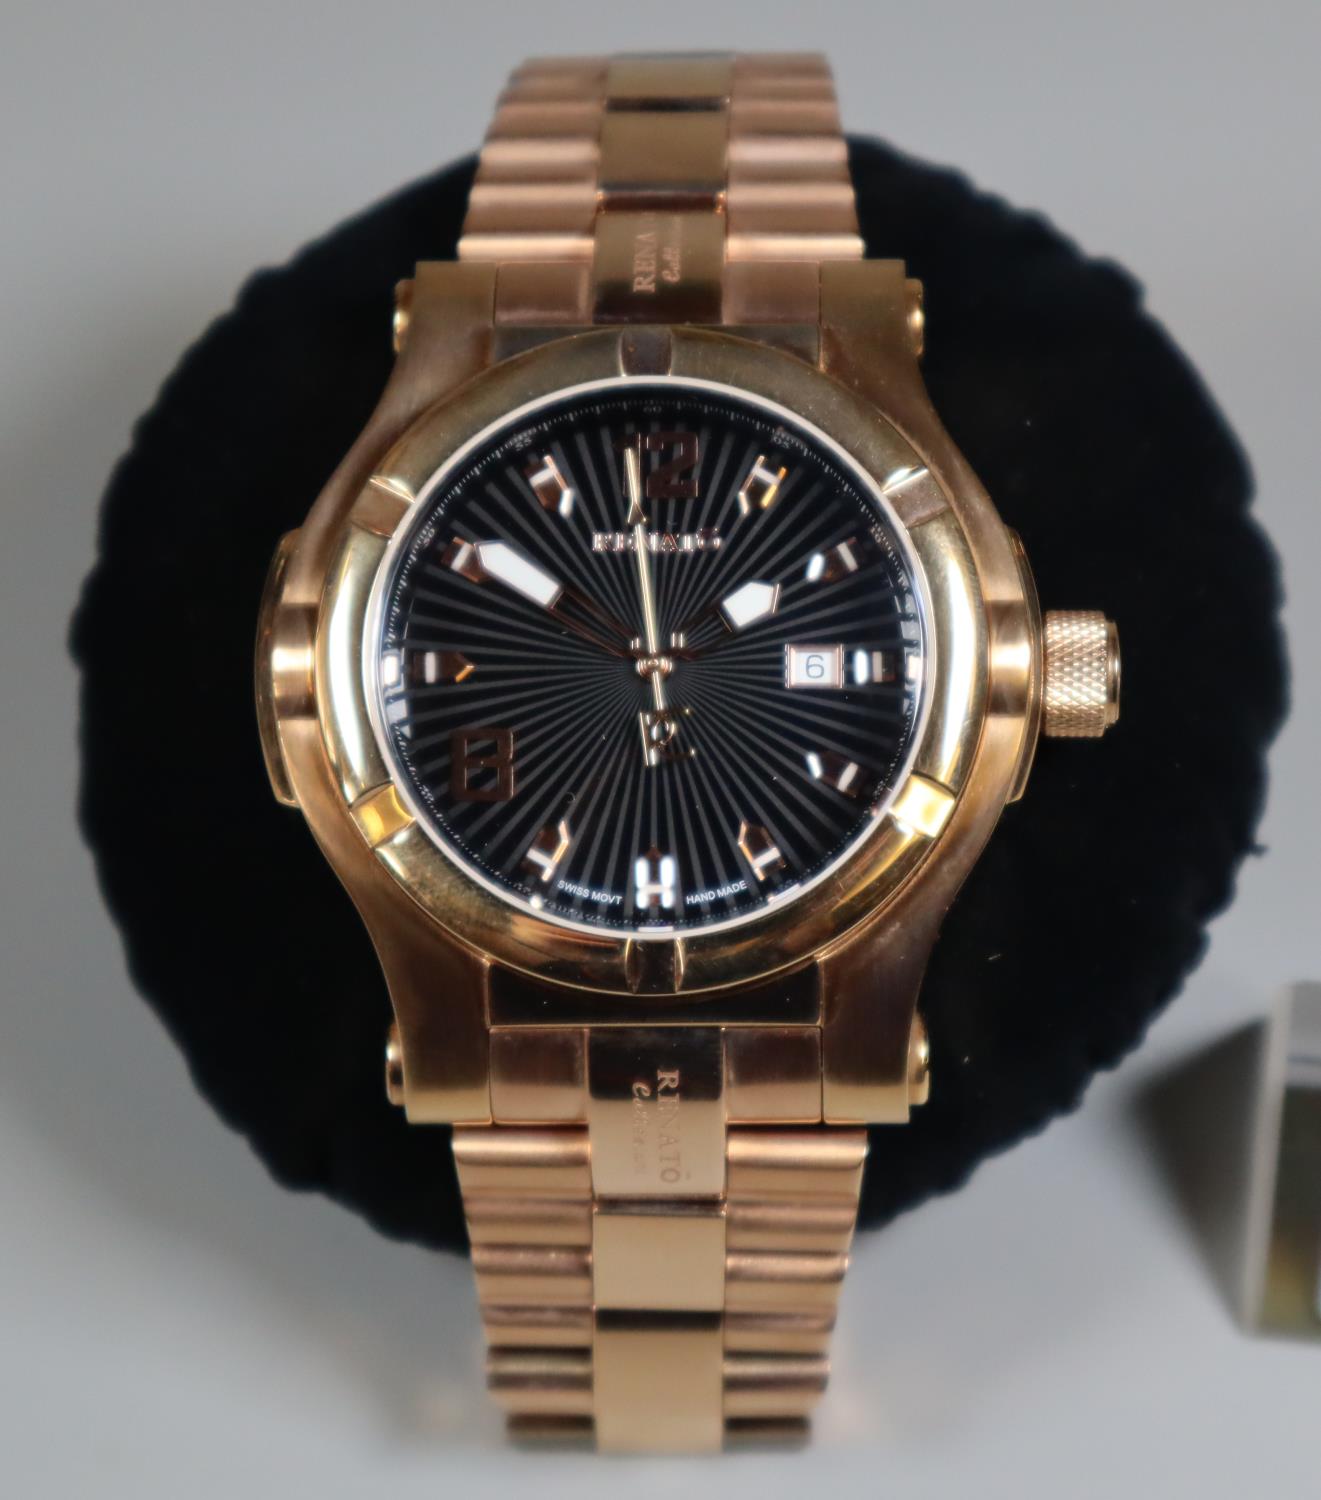 Renato Collezioni gents wrist watch in original presentation box. (B.P. 21% + VAT)